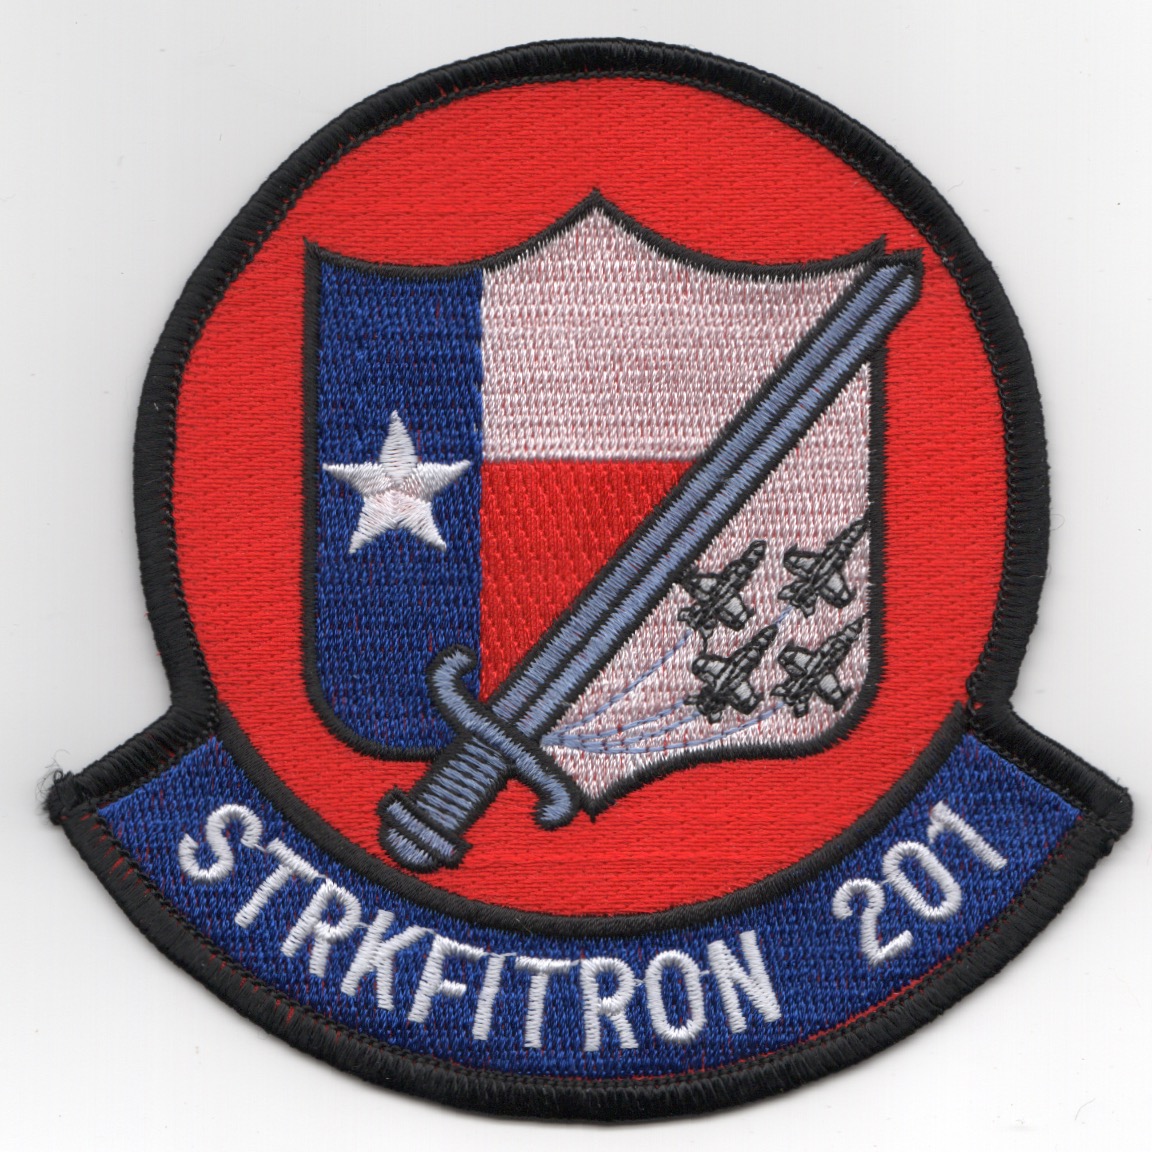 VFA-201 *STRKFITRON* Squadron Patch (1-Tab/R-W-B)